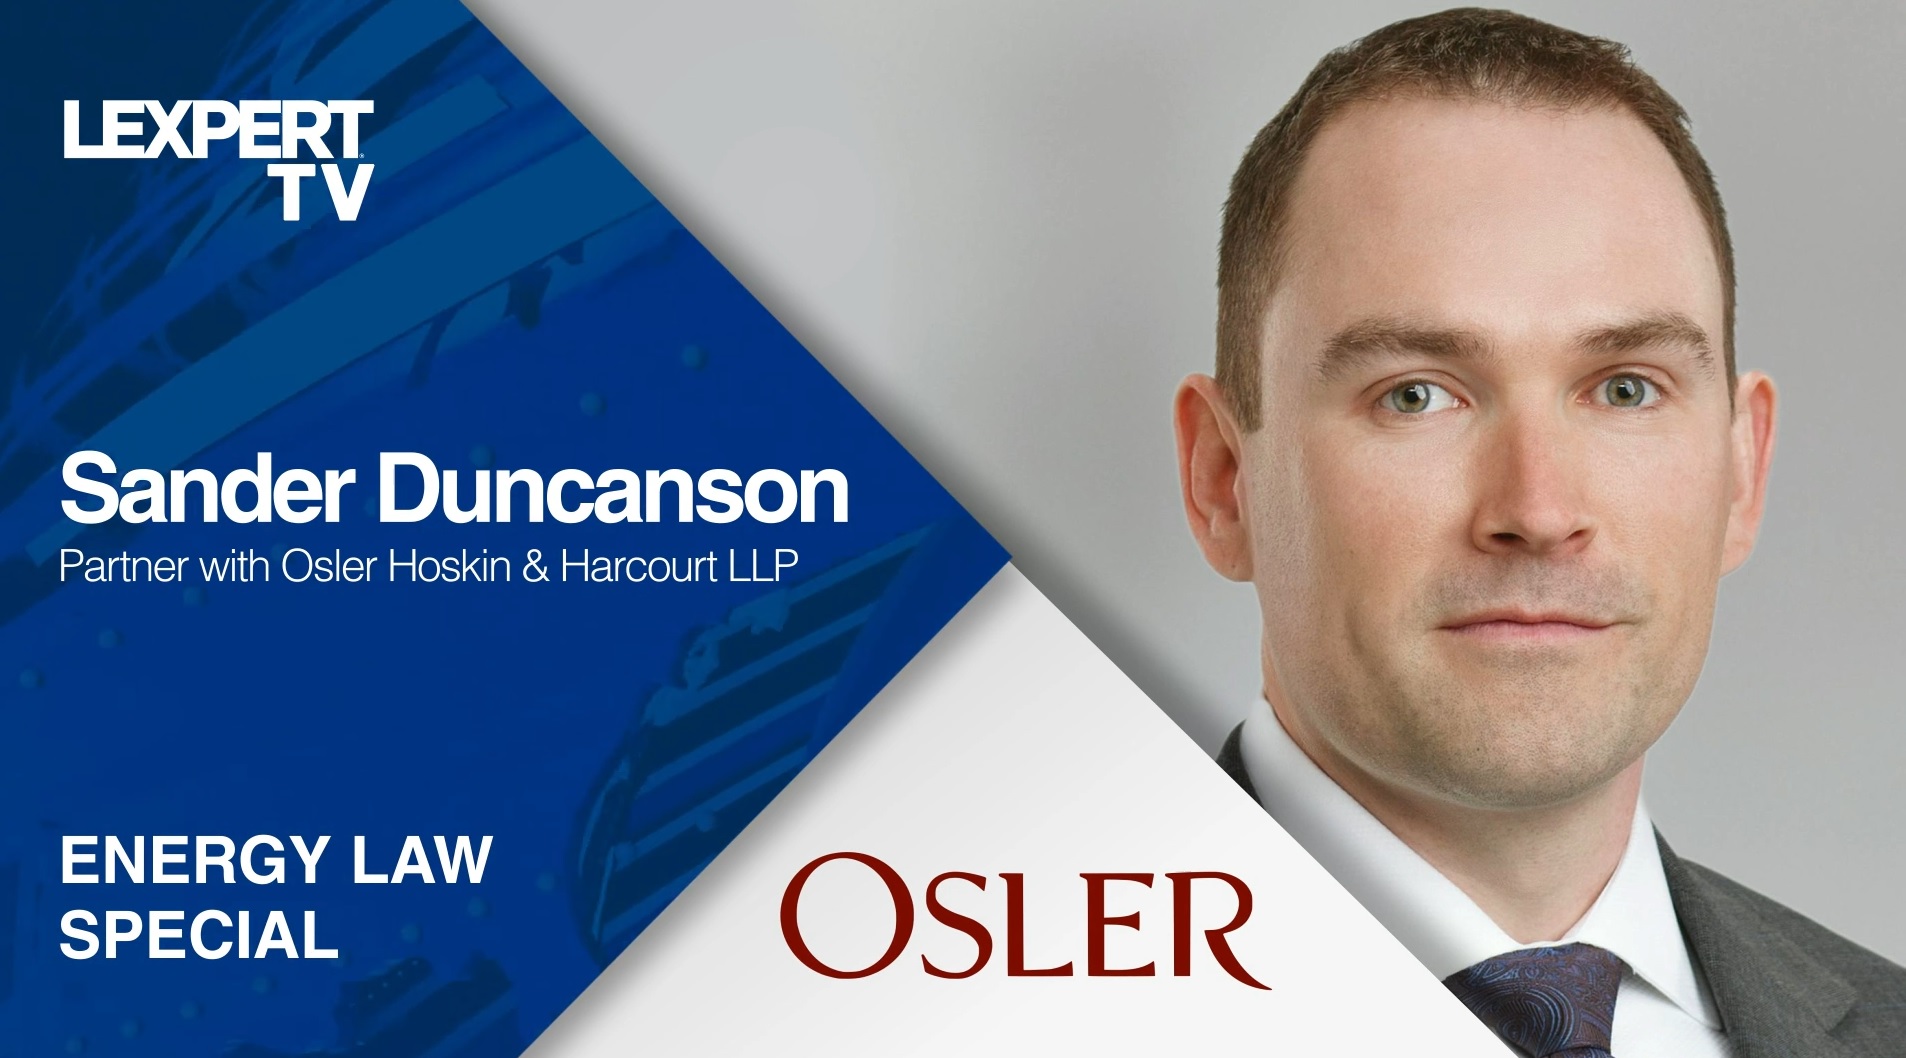 Sander Duncanson, Partner at Osler, speaks about Energy Law